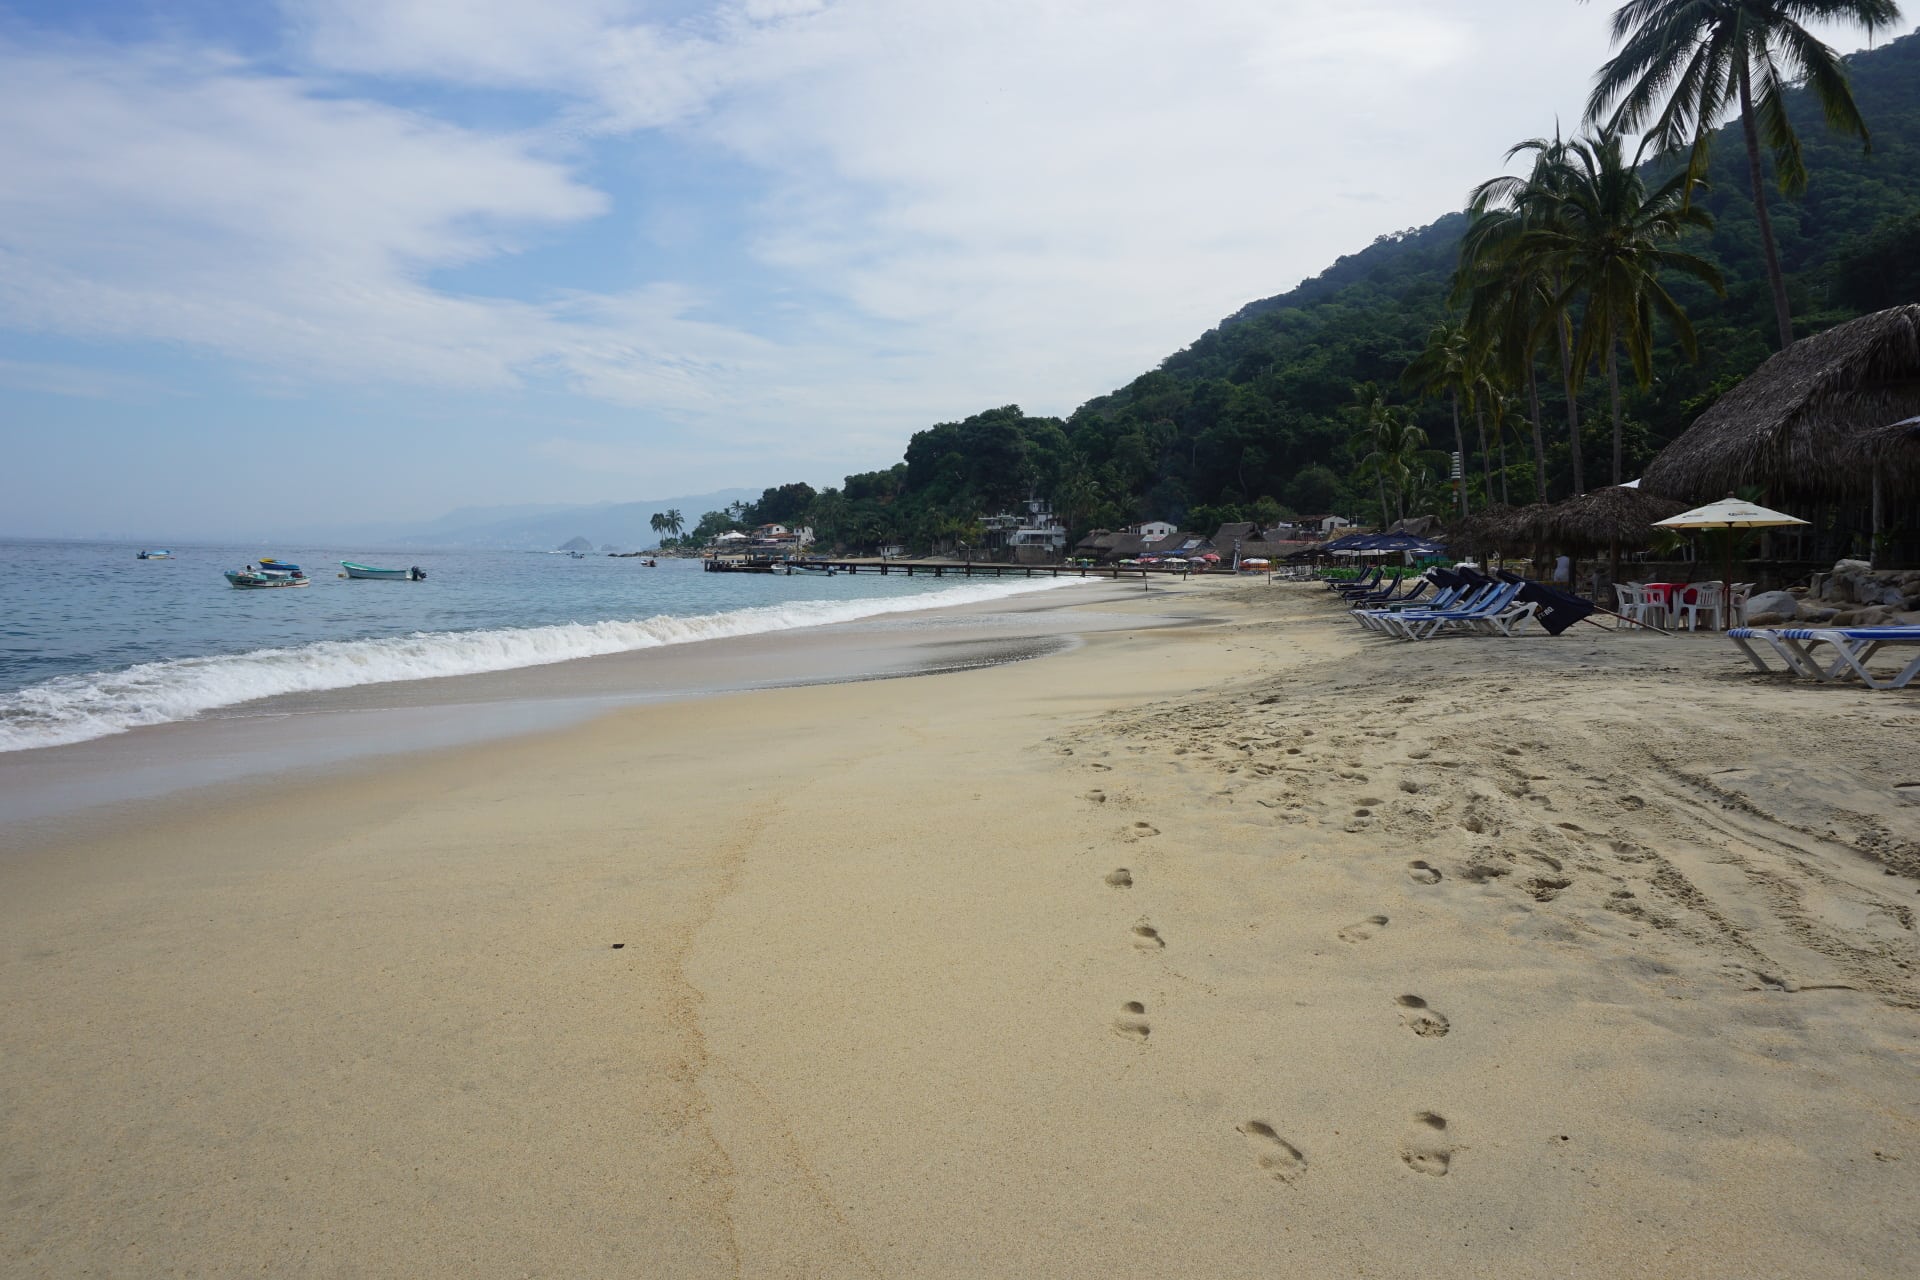 Footprints in the sand on an empty beach